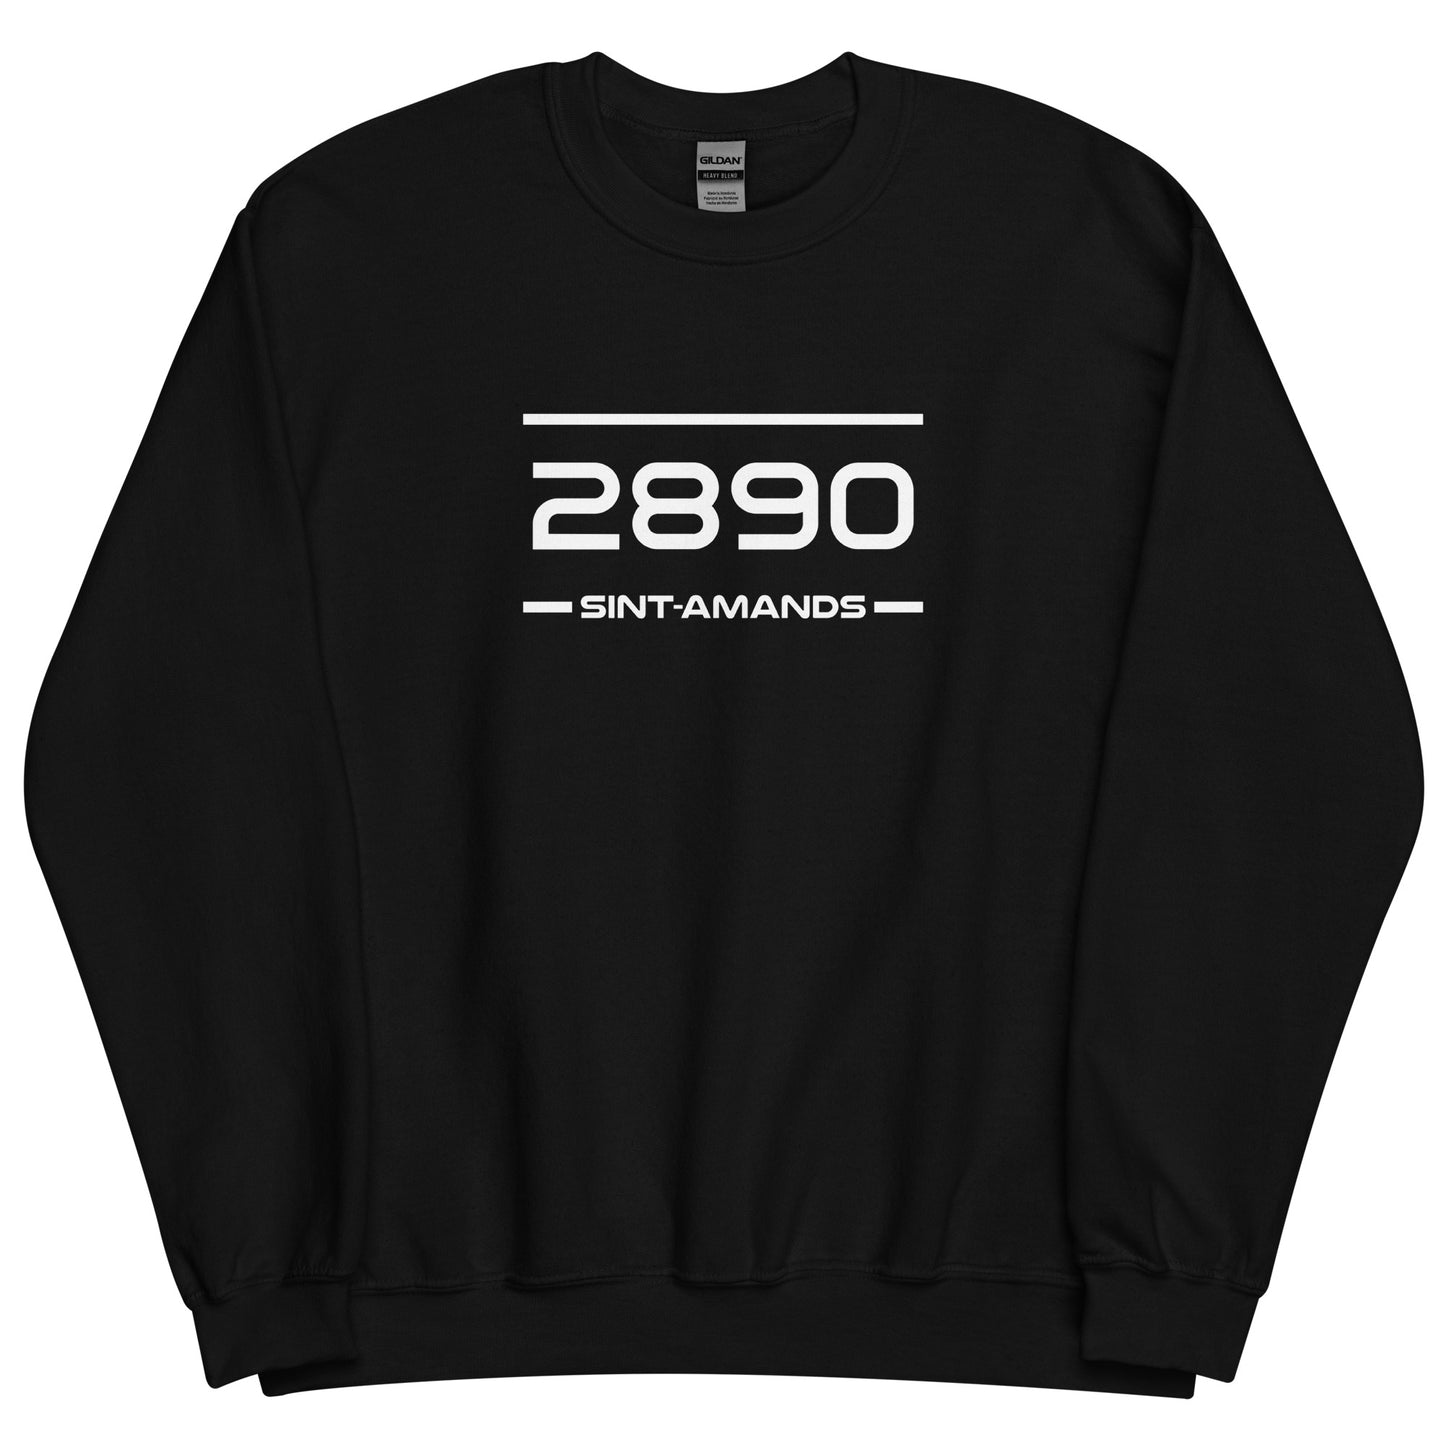 Sweater - 2890 - Sint-Amands (M/V)